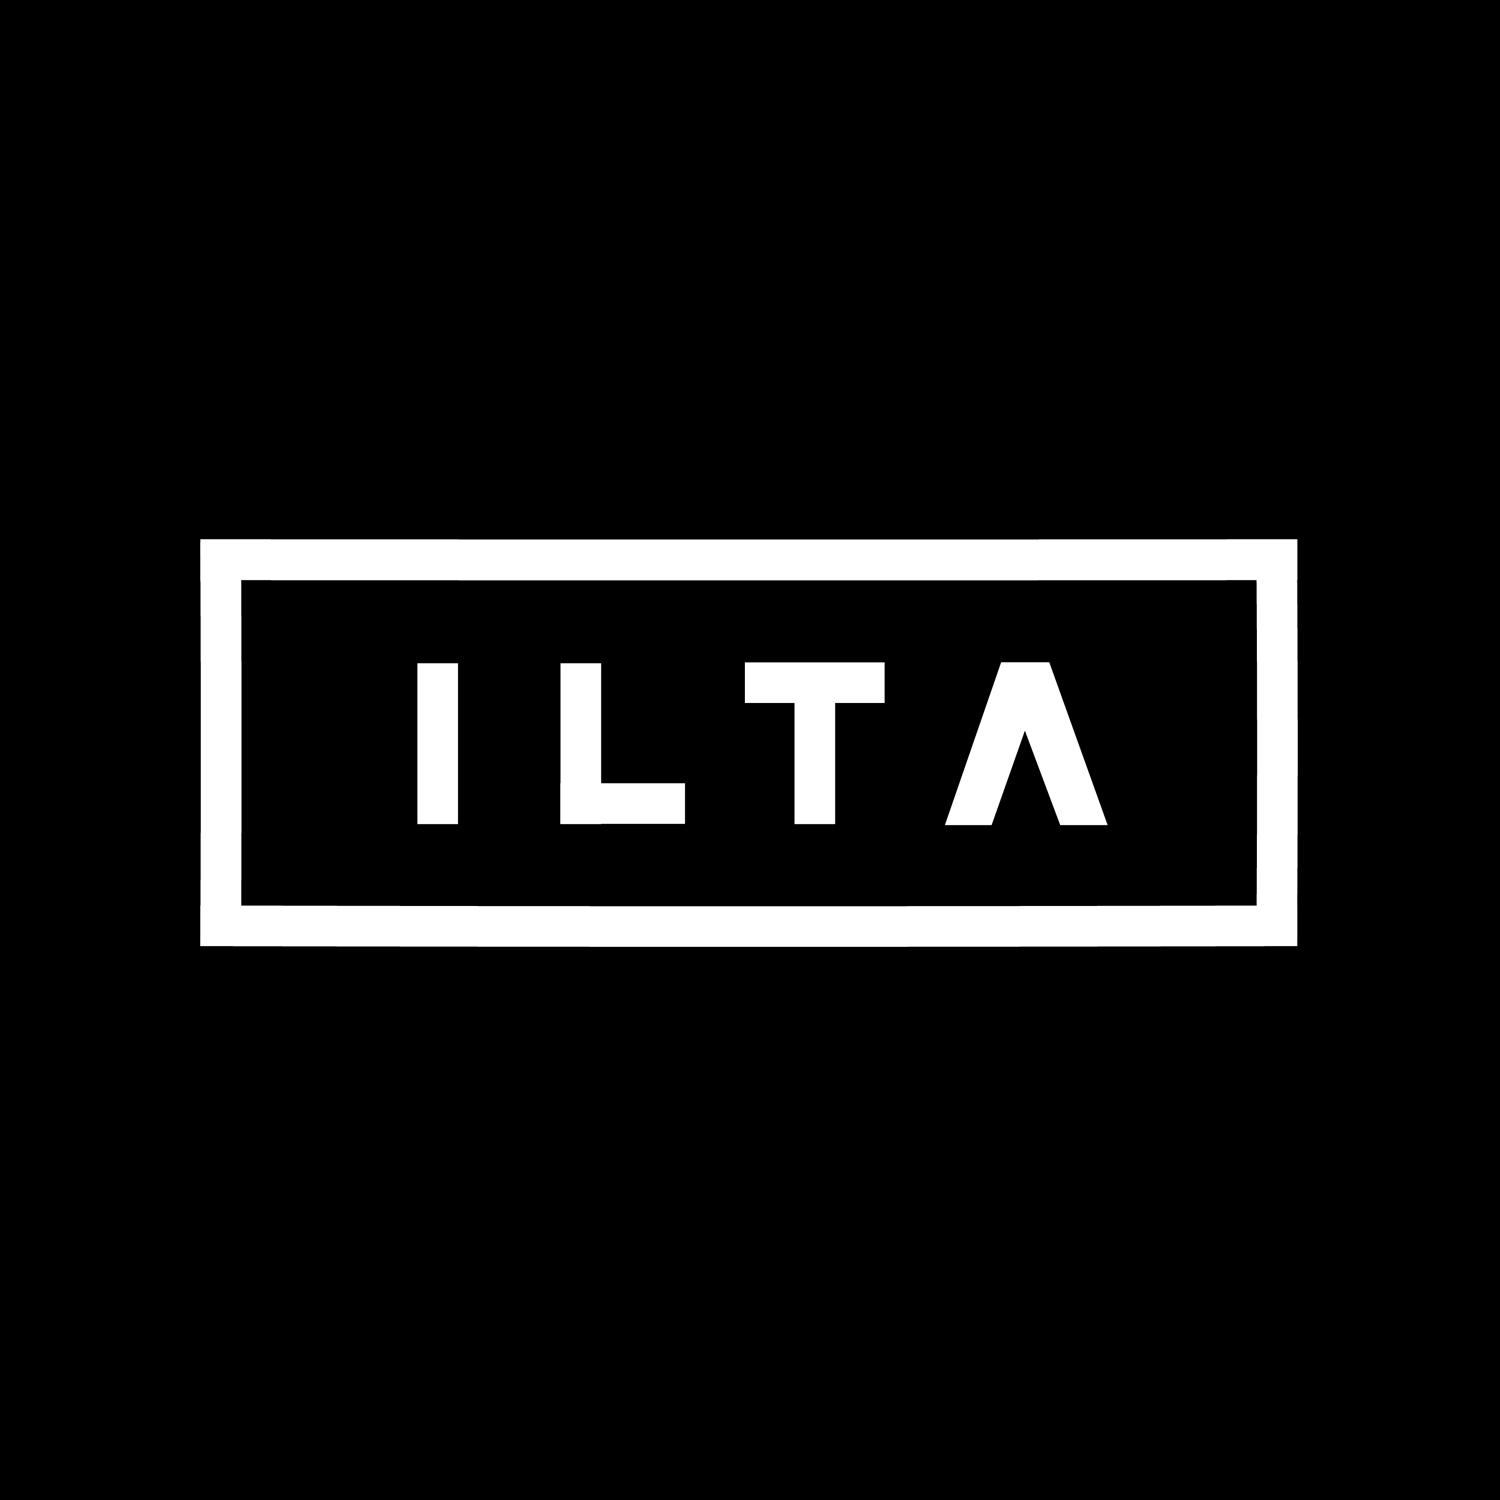  ILTA Podcast // This is Church // Osa 1 // Pekka Perho